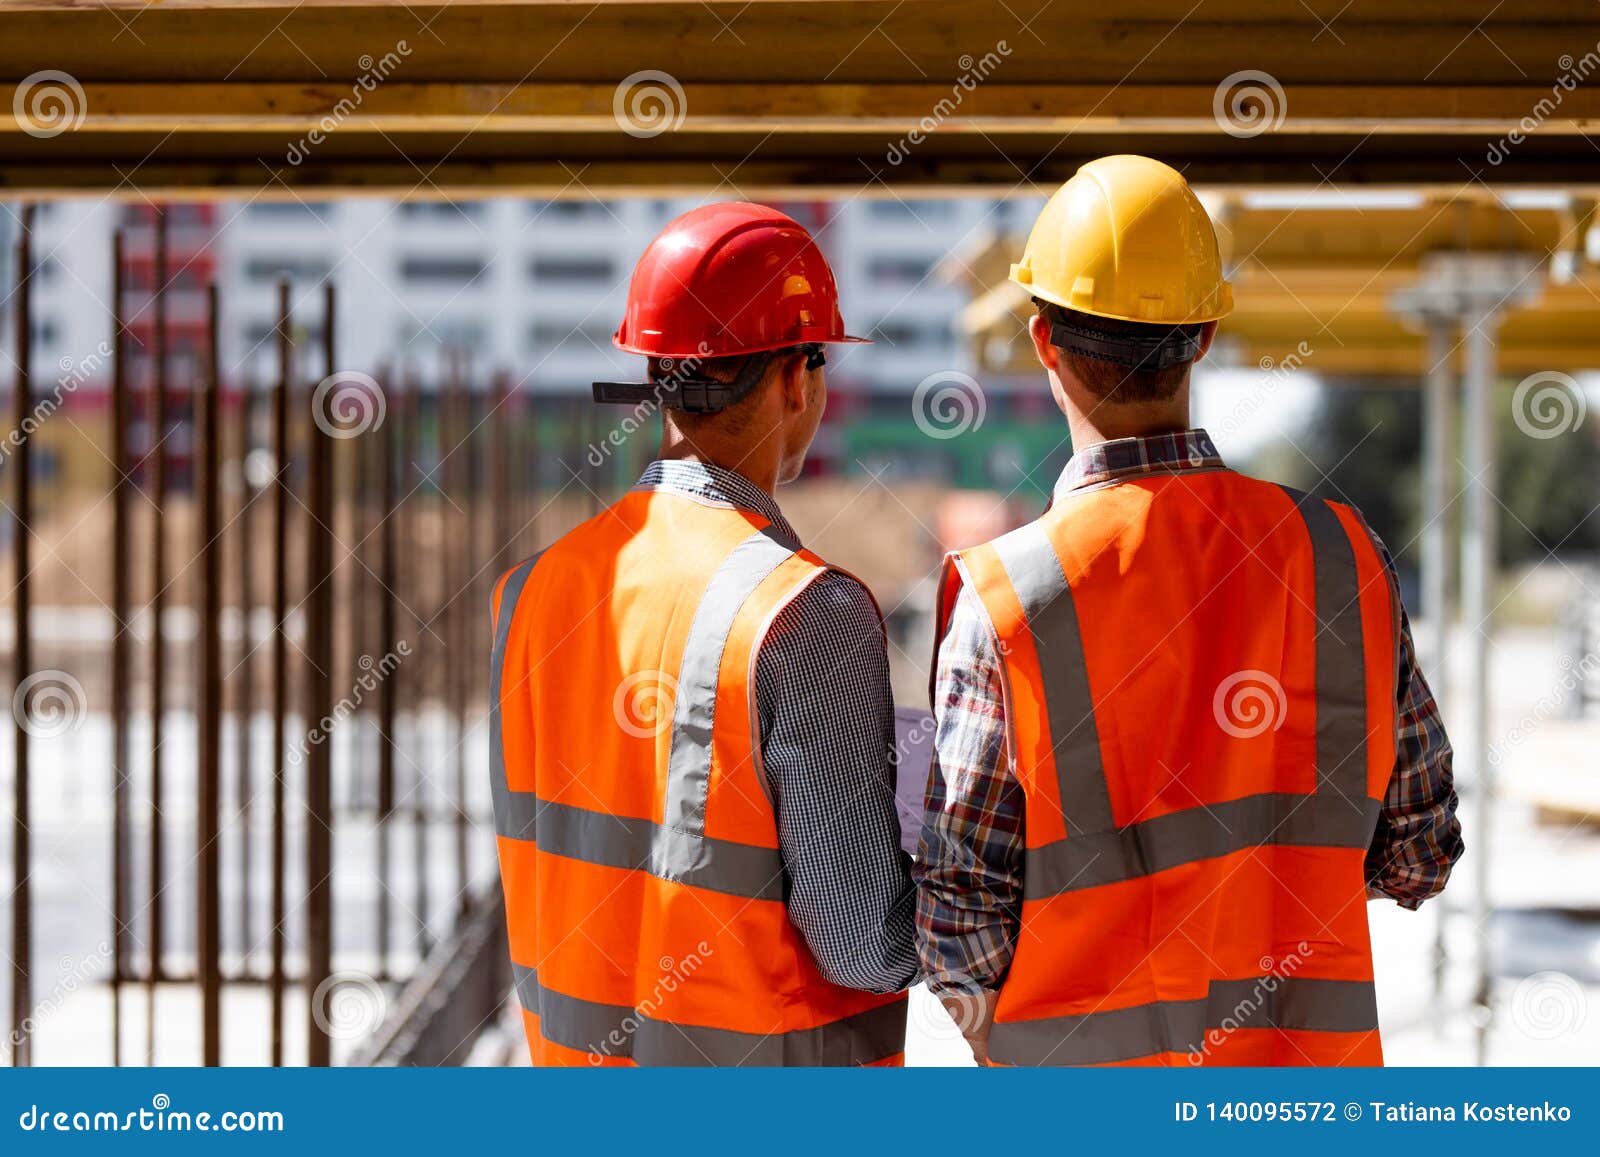 Two Civil Engineers Dressed In Orange Work Vests And Helmets Discuss